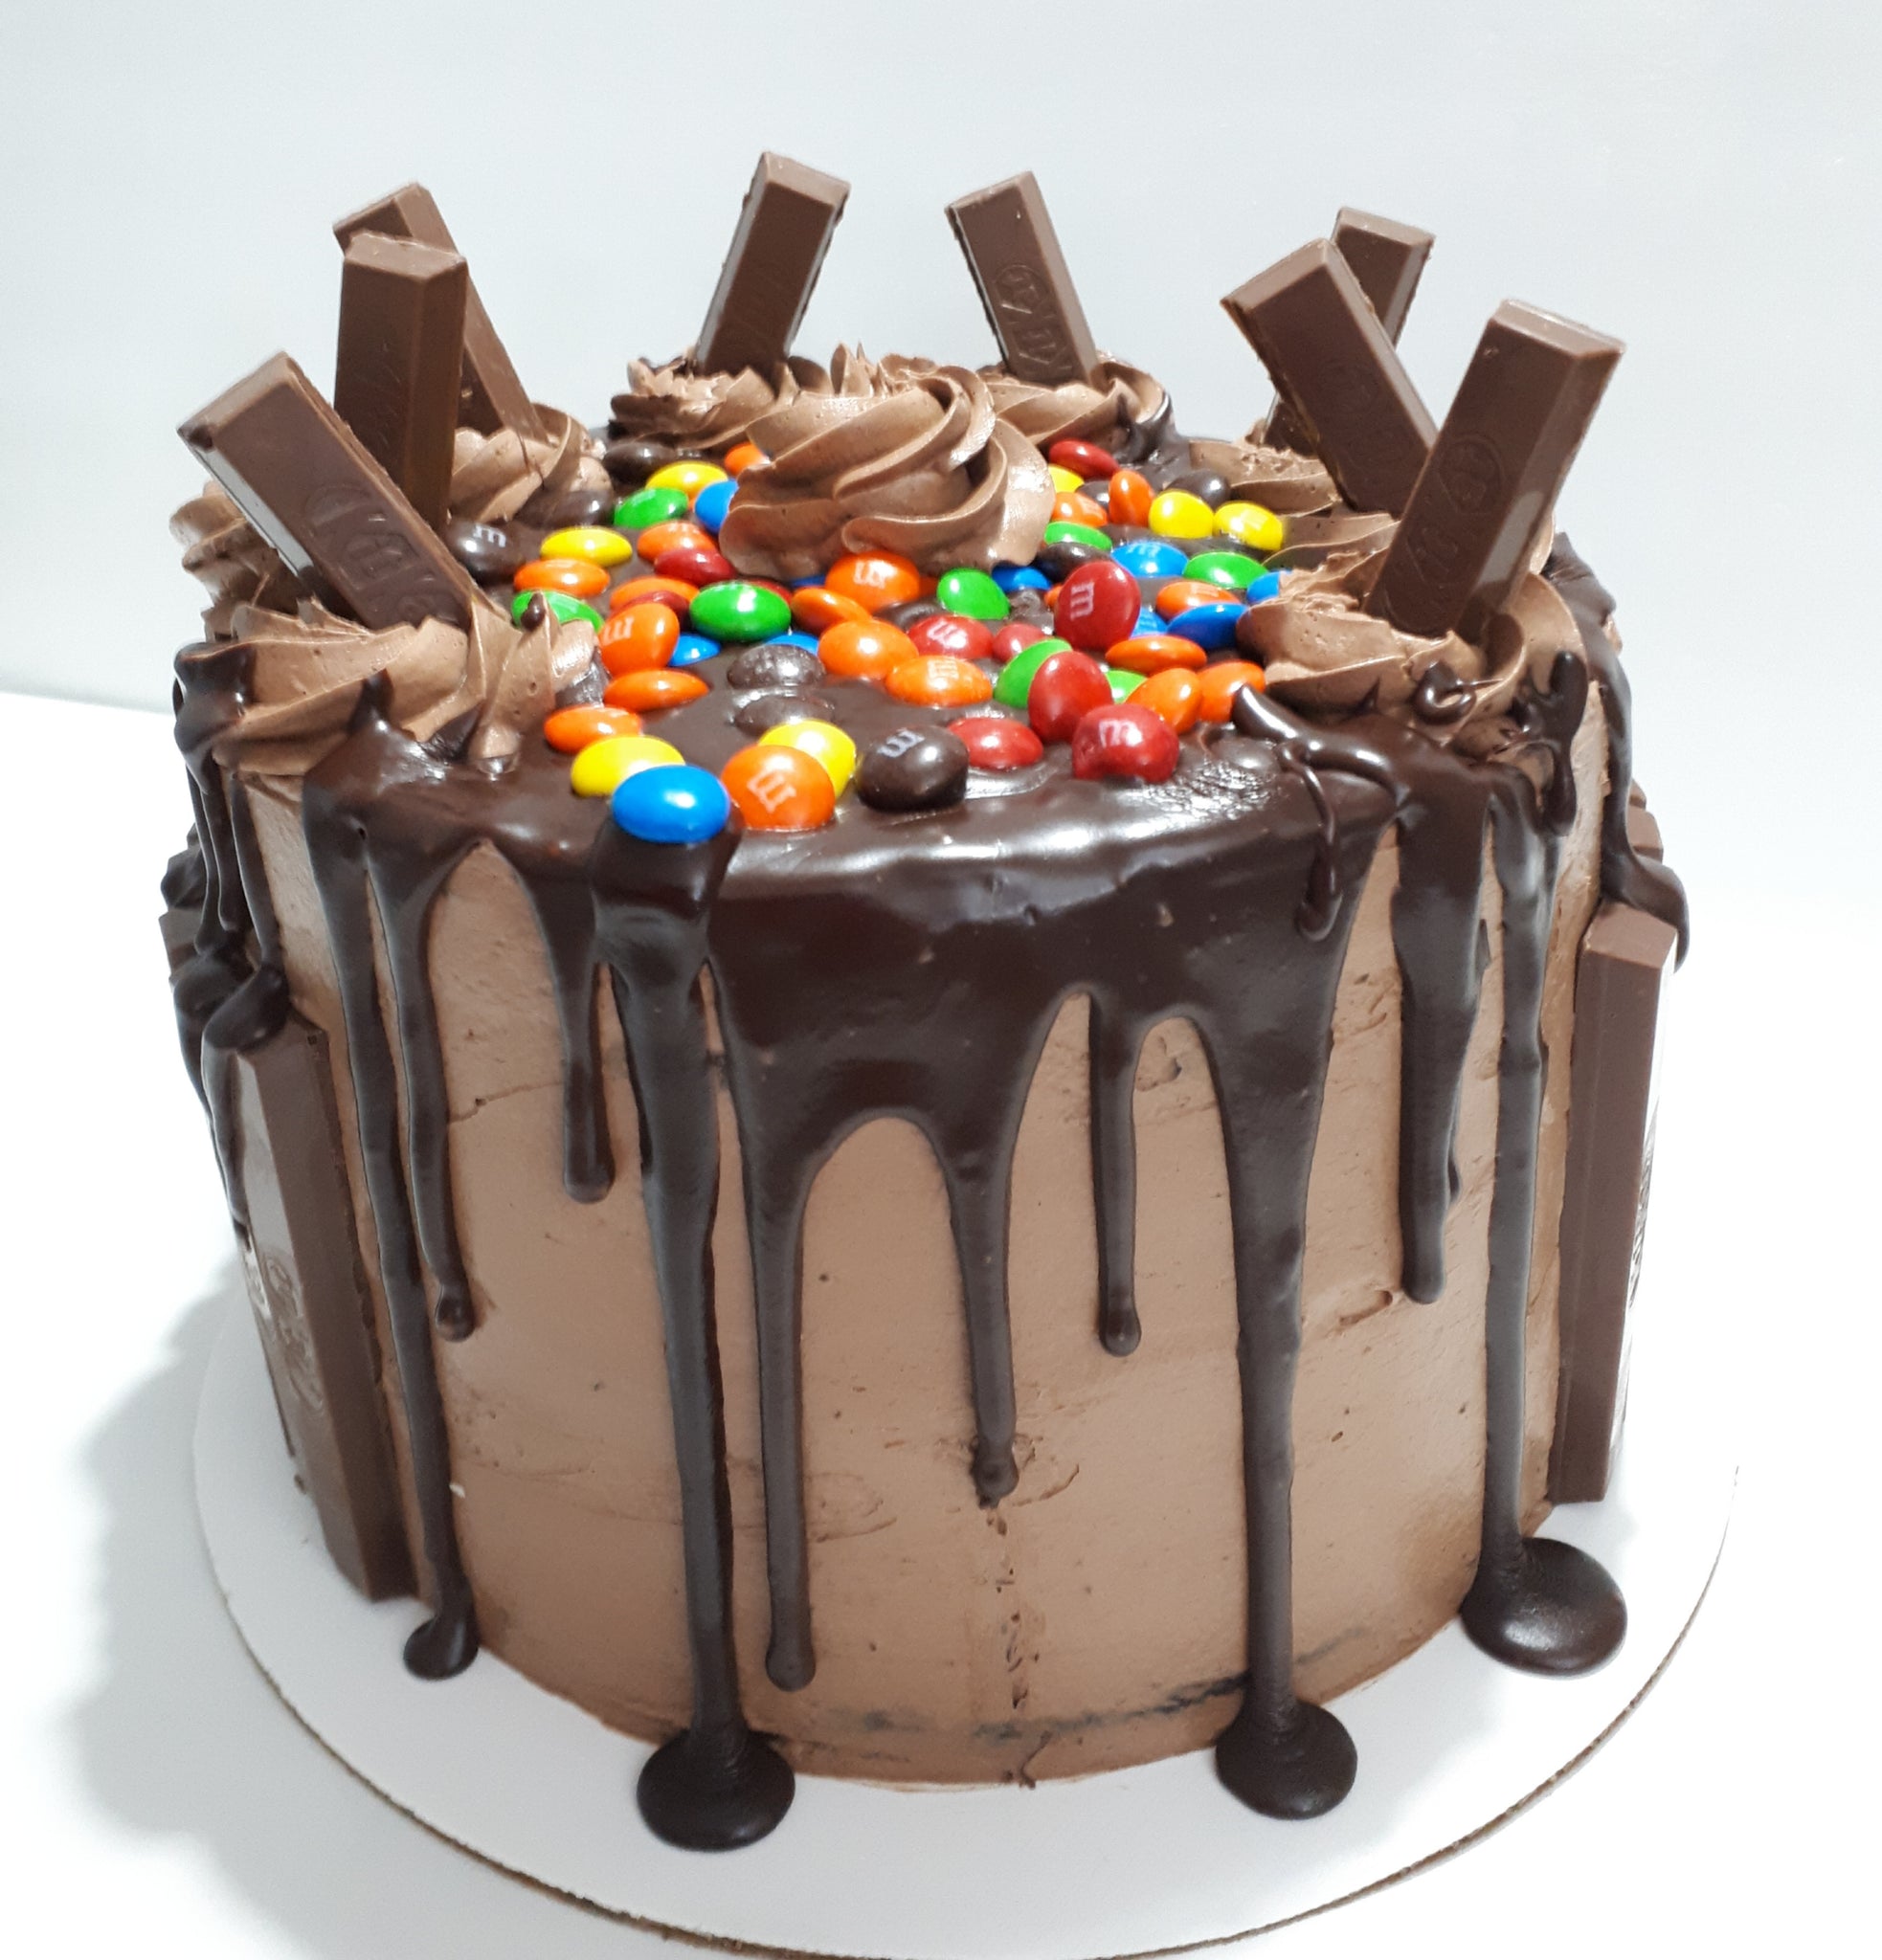 Best Chocolate Caramel Crunch Cake Recipe - How to Make Crunch Cake